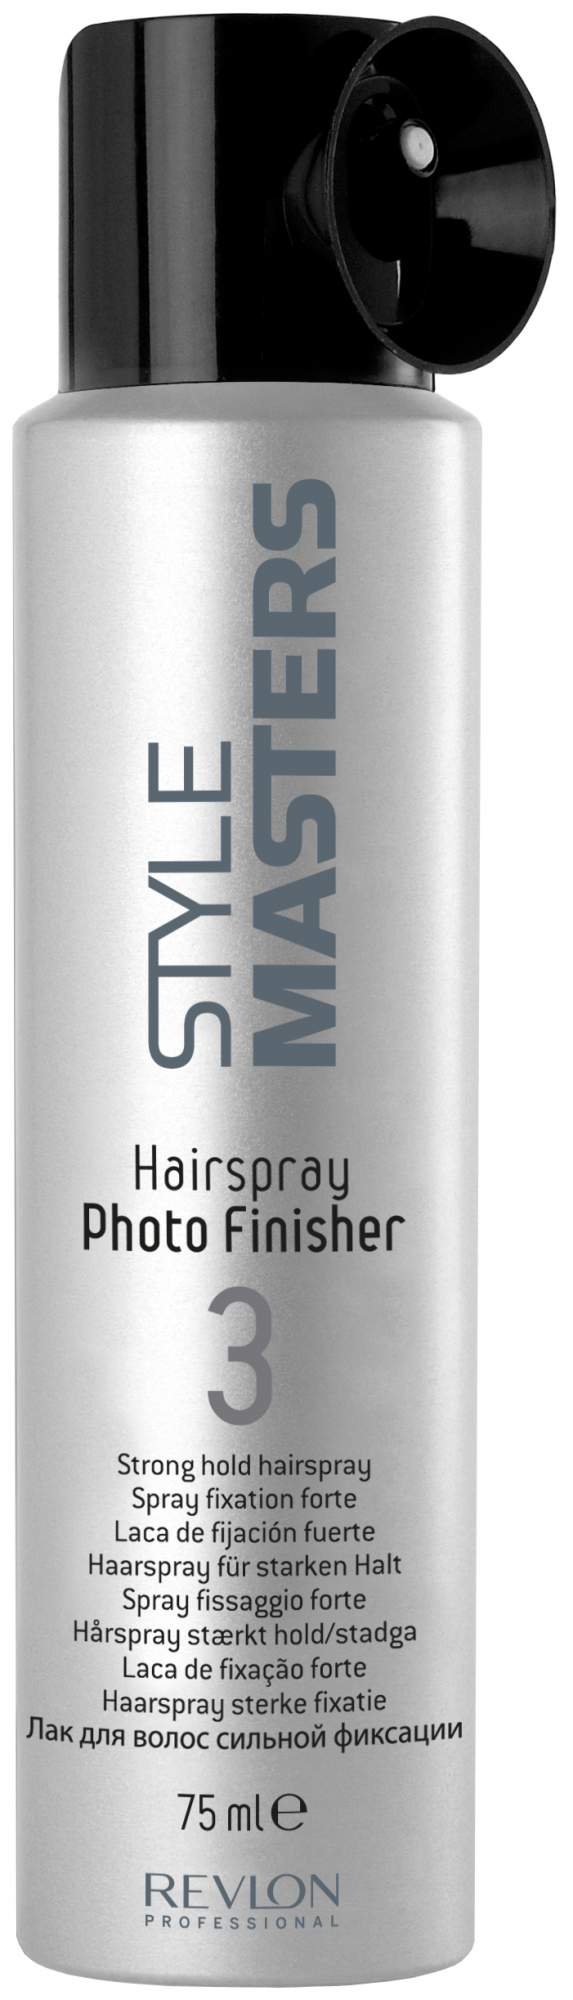 Лак для волос сильной фиксации RP SM HAIRSPRAY PHOTO FINISHER 75 мл